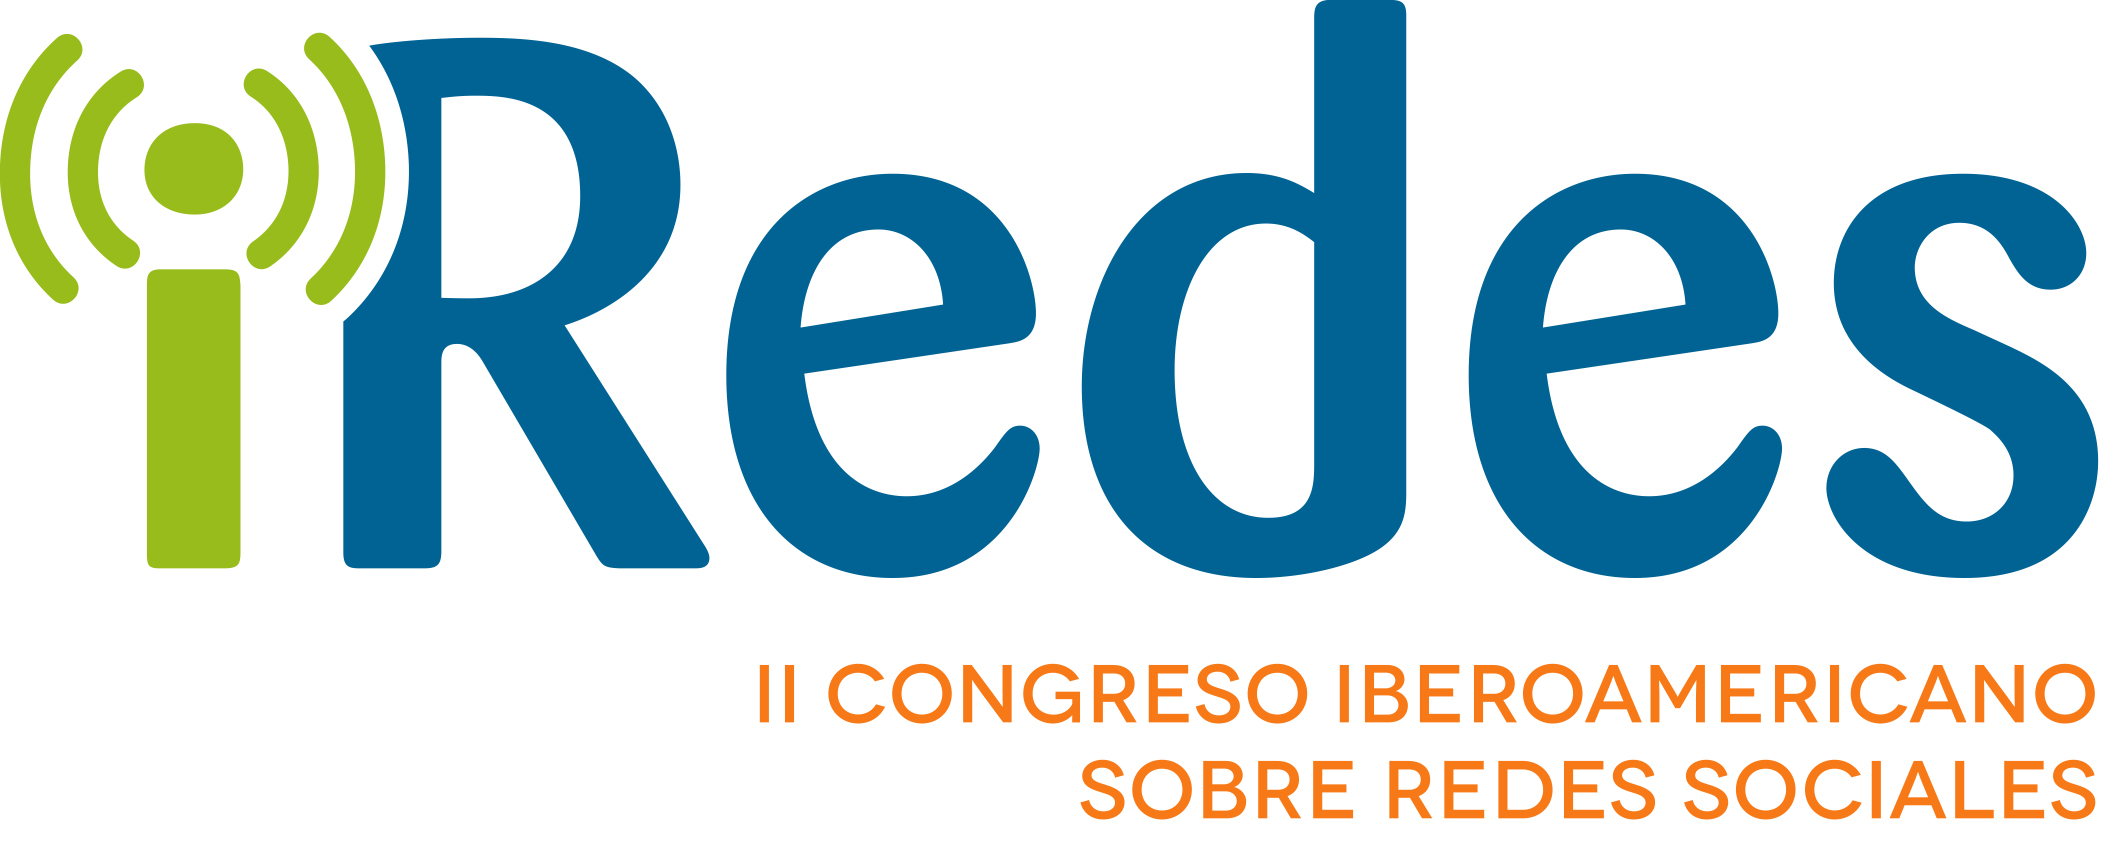 Logotipo iRedes 2012